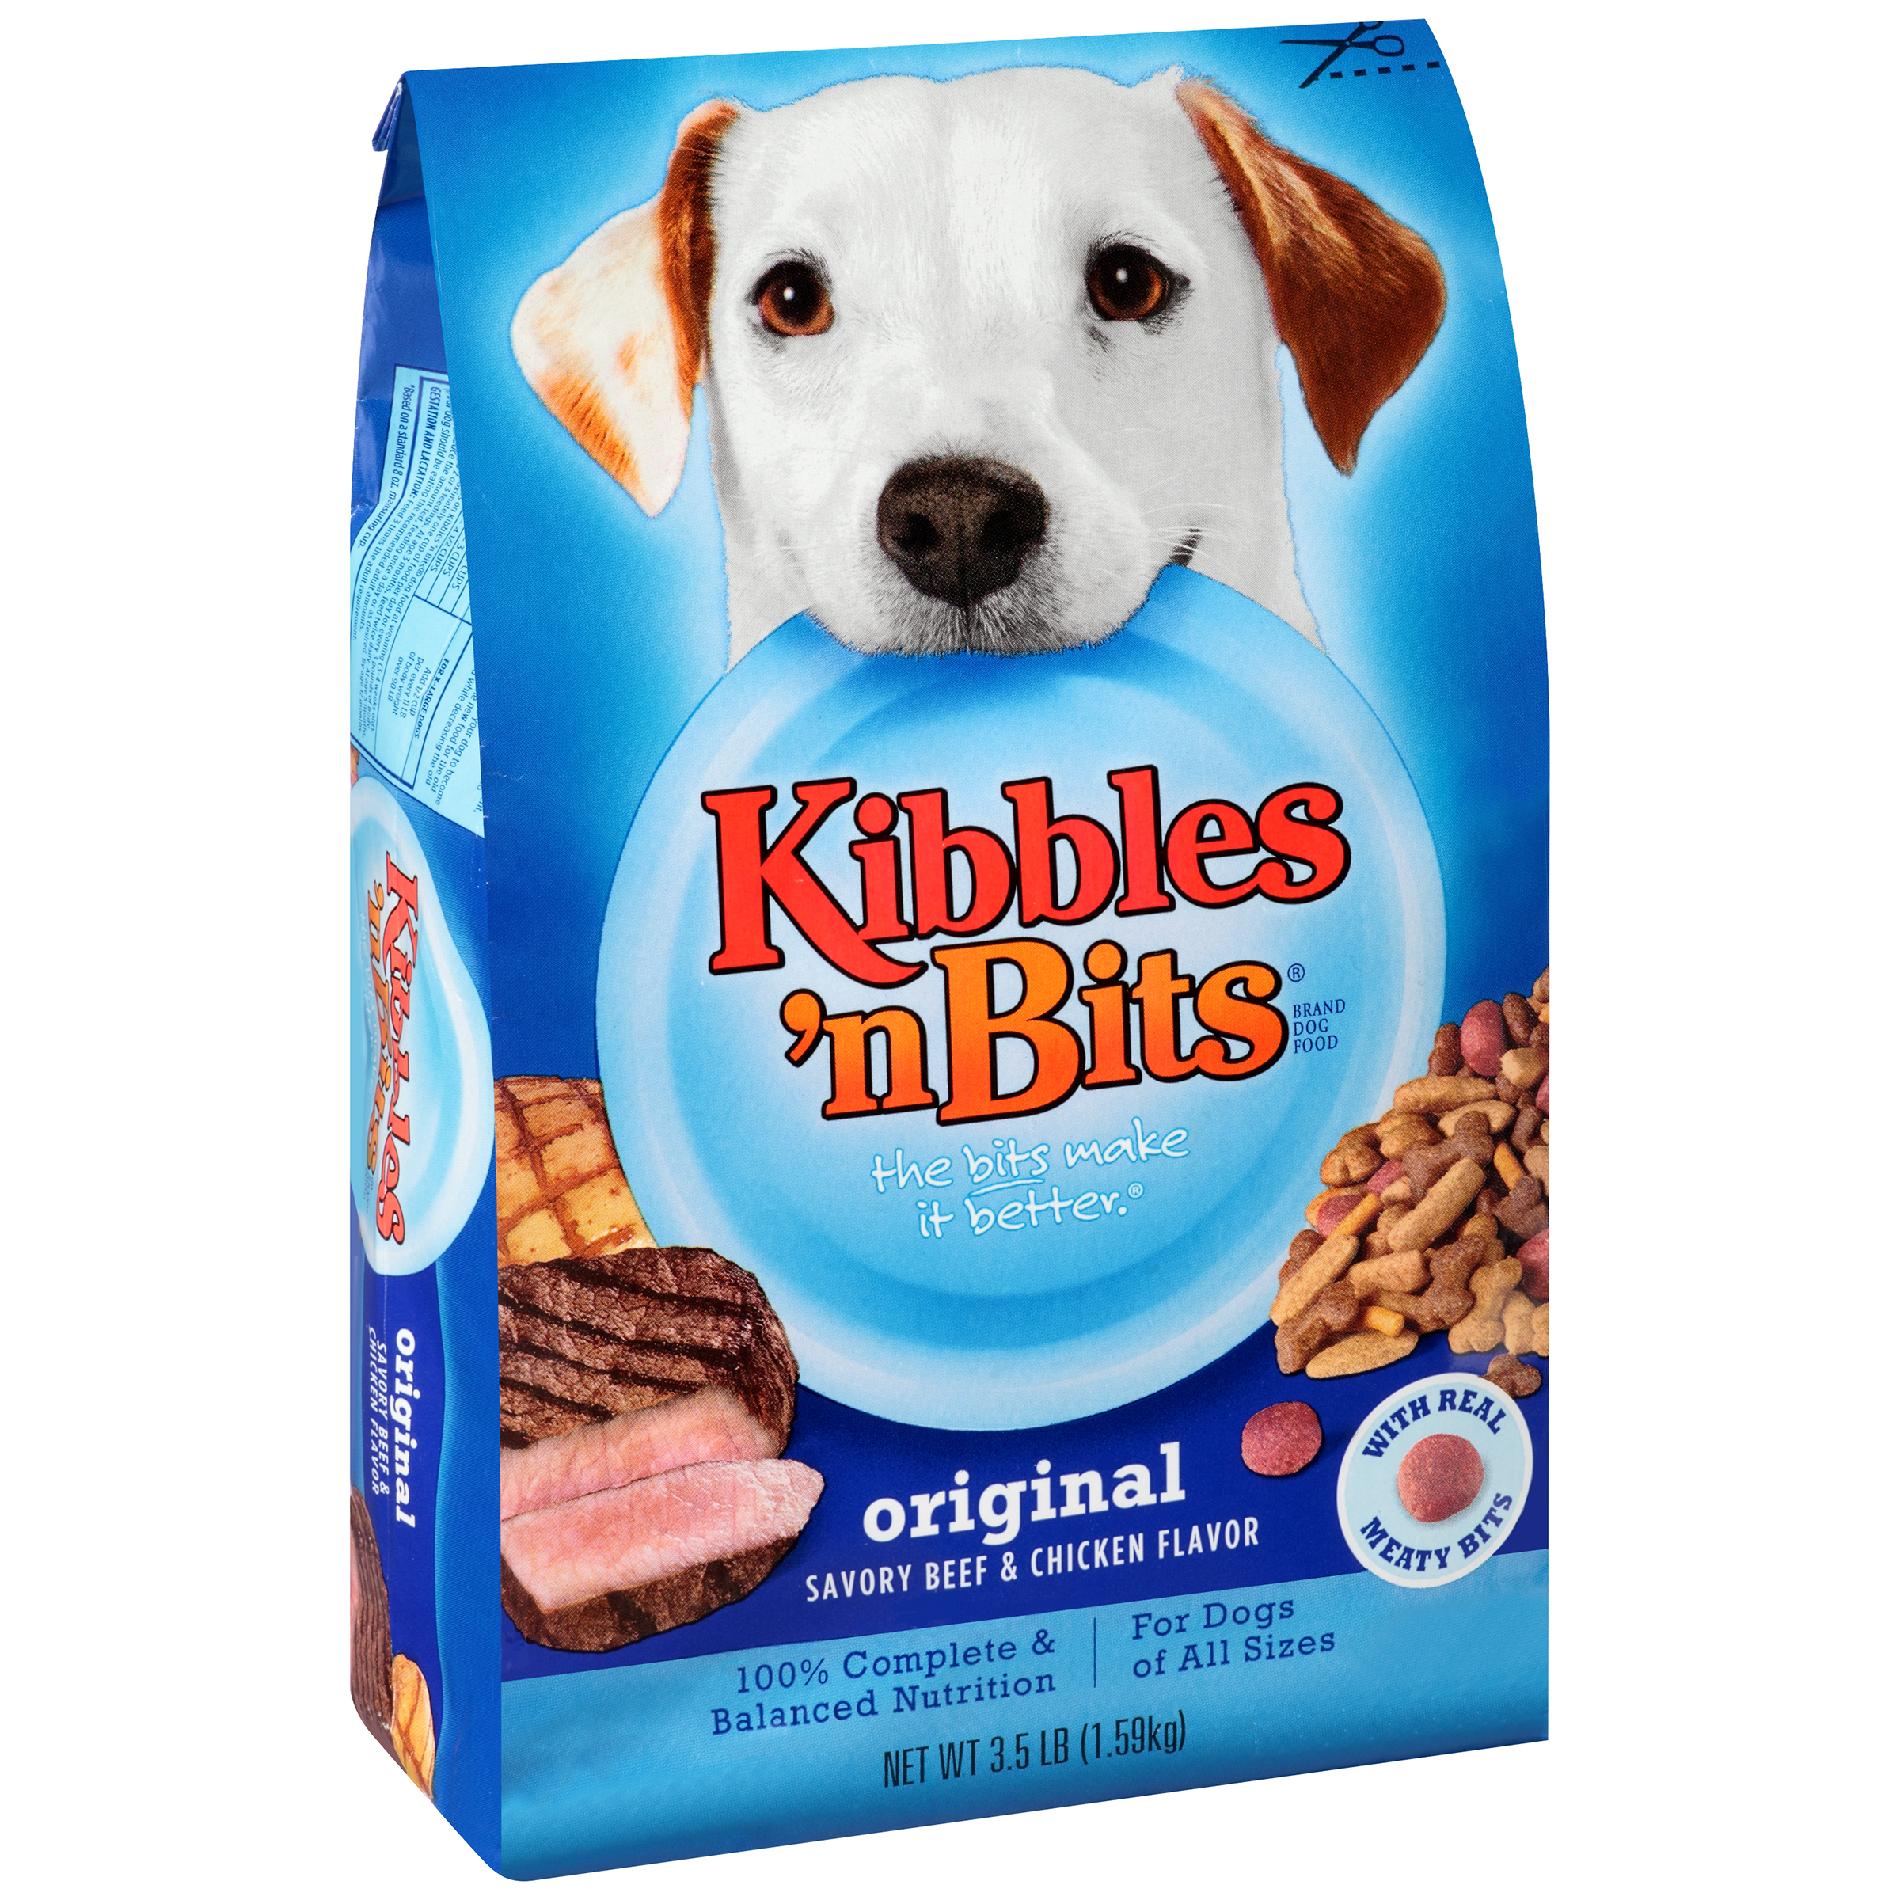 Kibbles 'n Bits Dry Dog Food, Original Savory Beef & Chicken Flavor, 3.5 Lb.